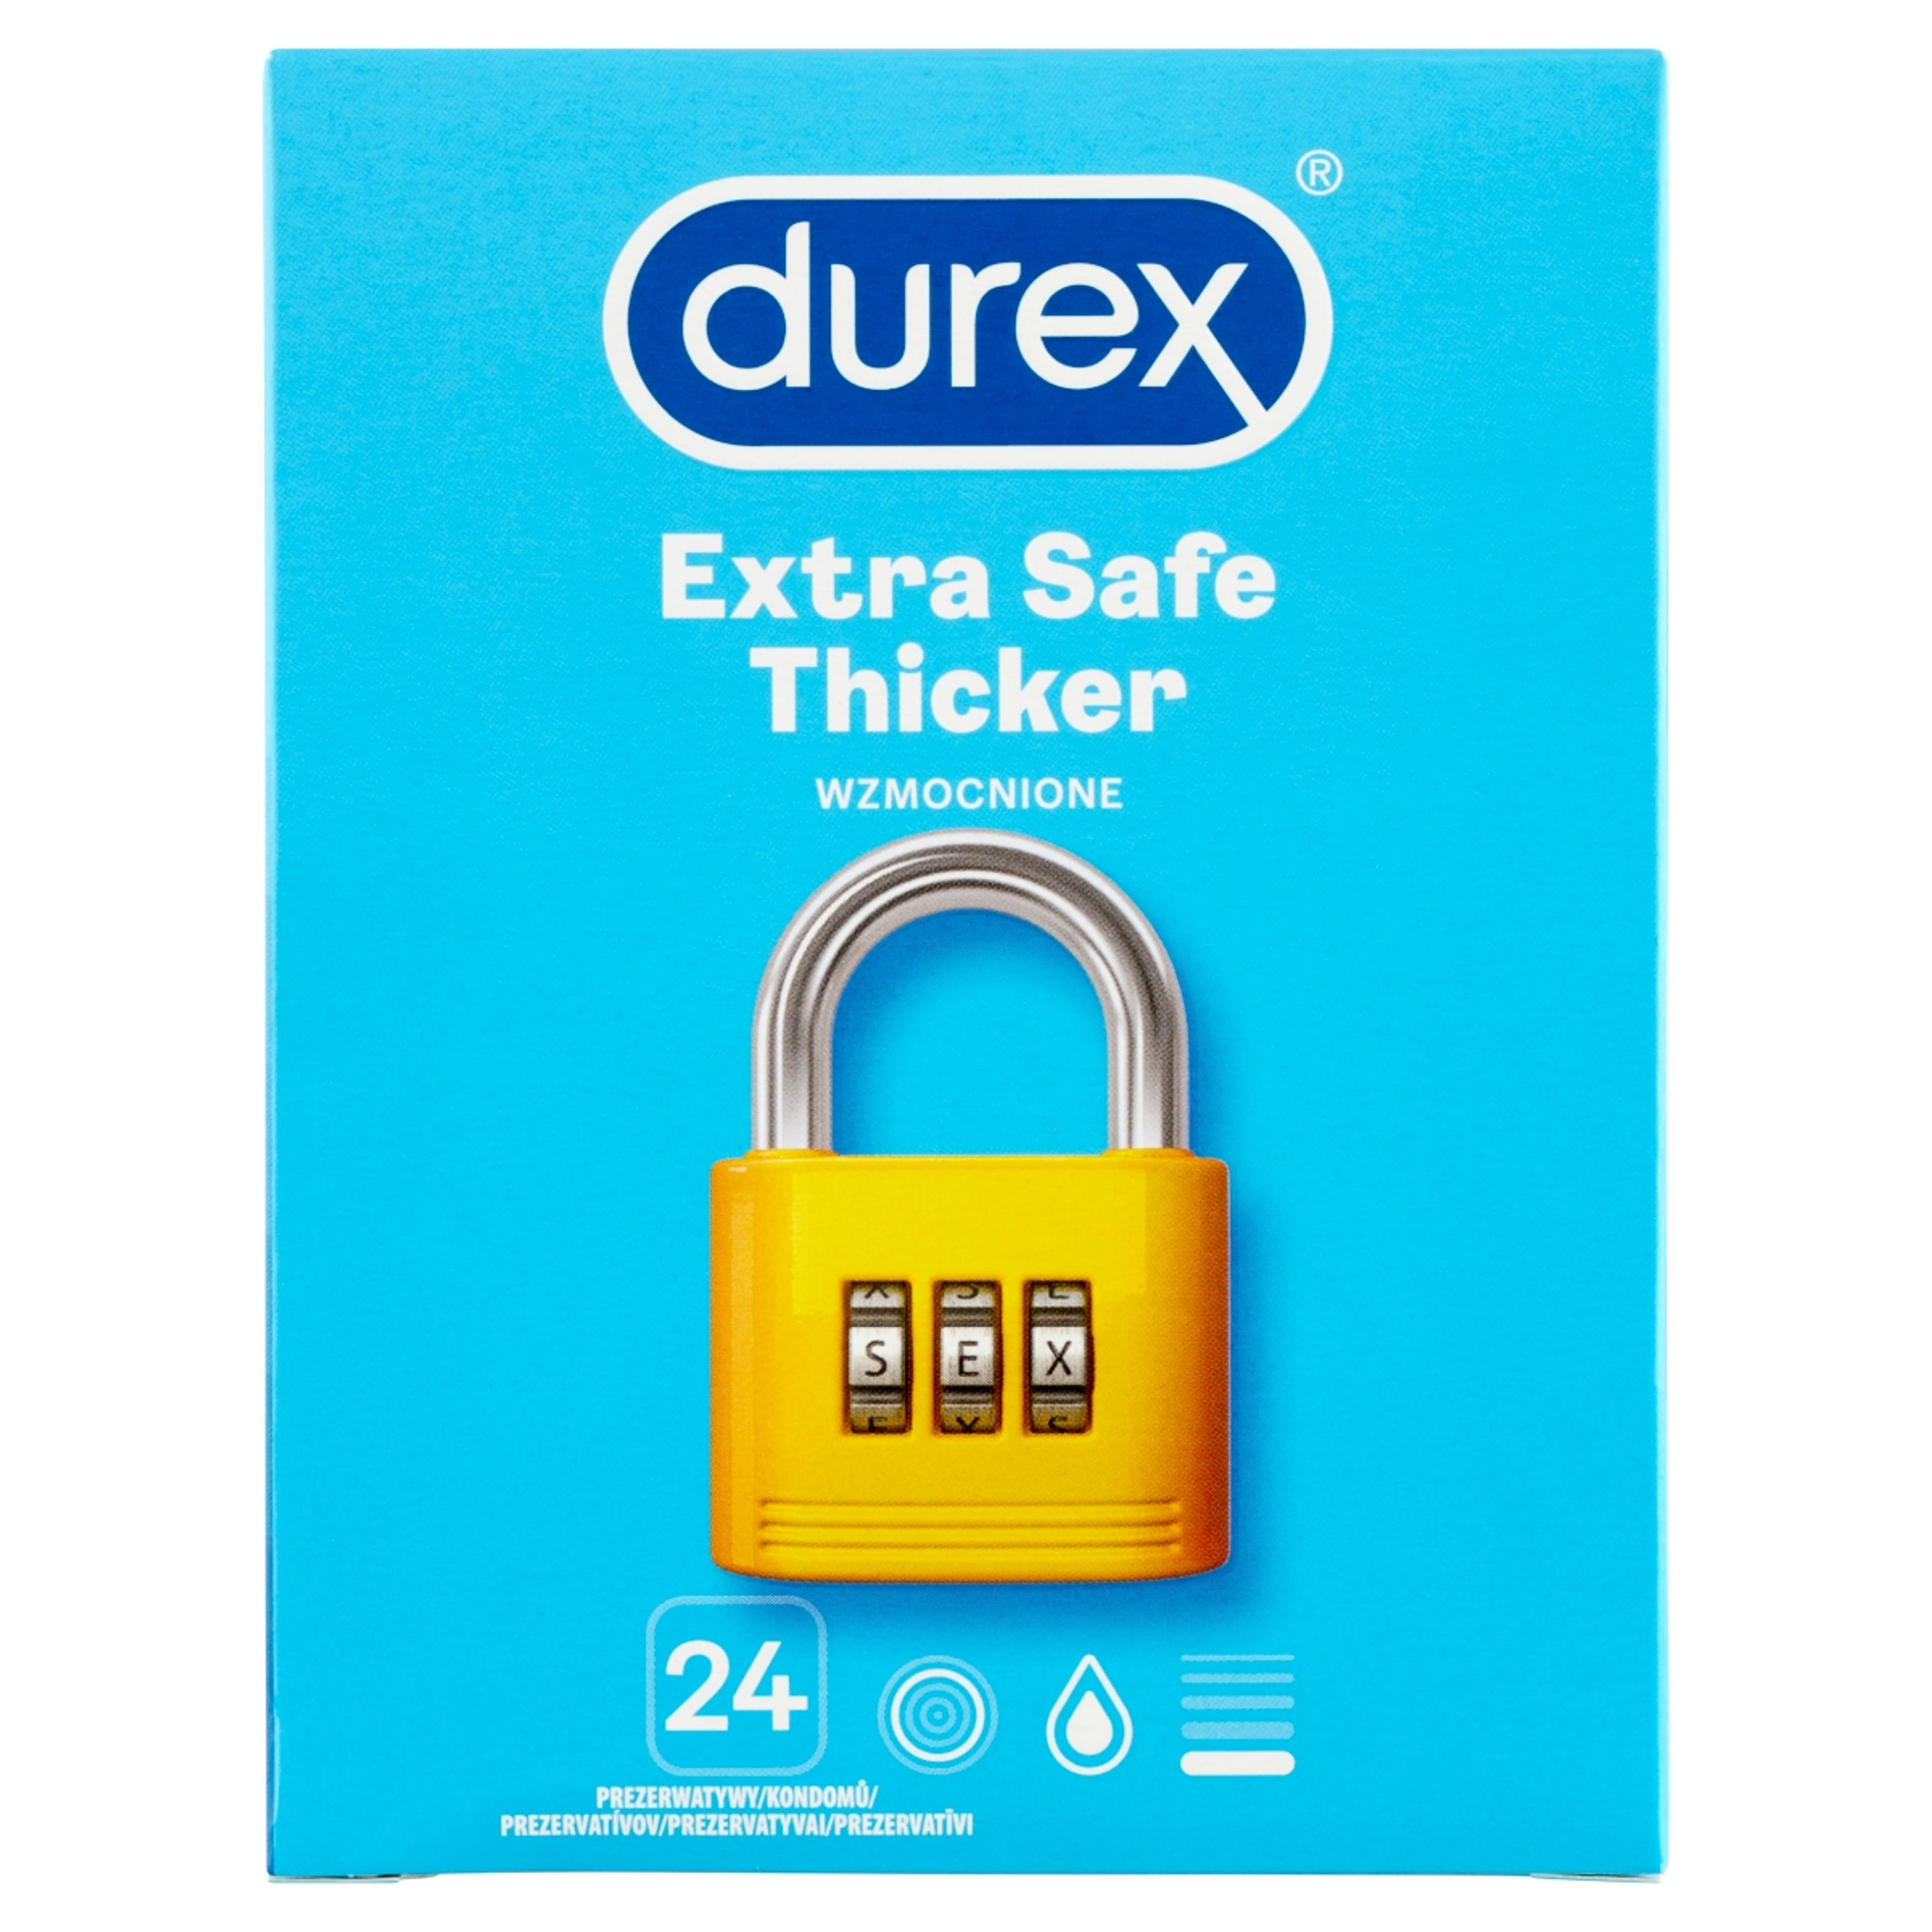 Durex óvszer extra safe - 24 db-1